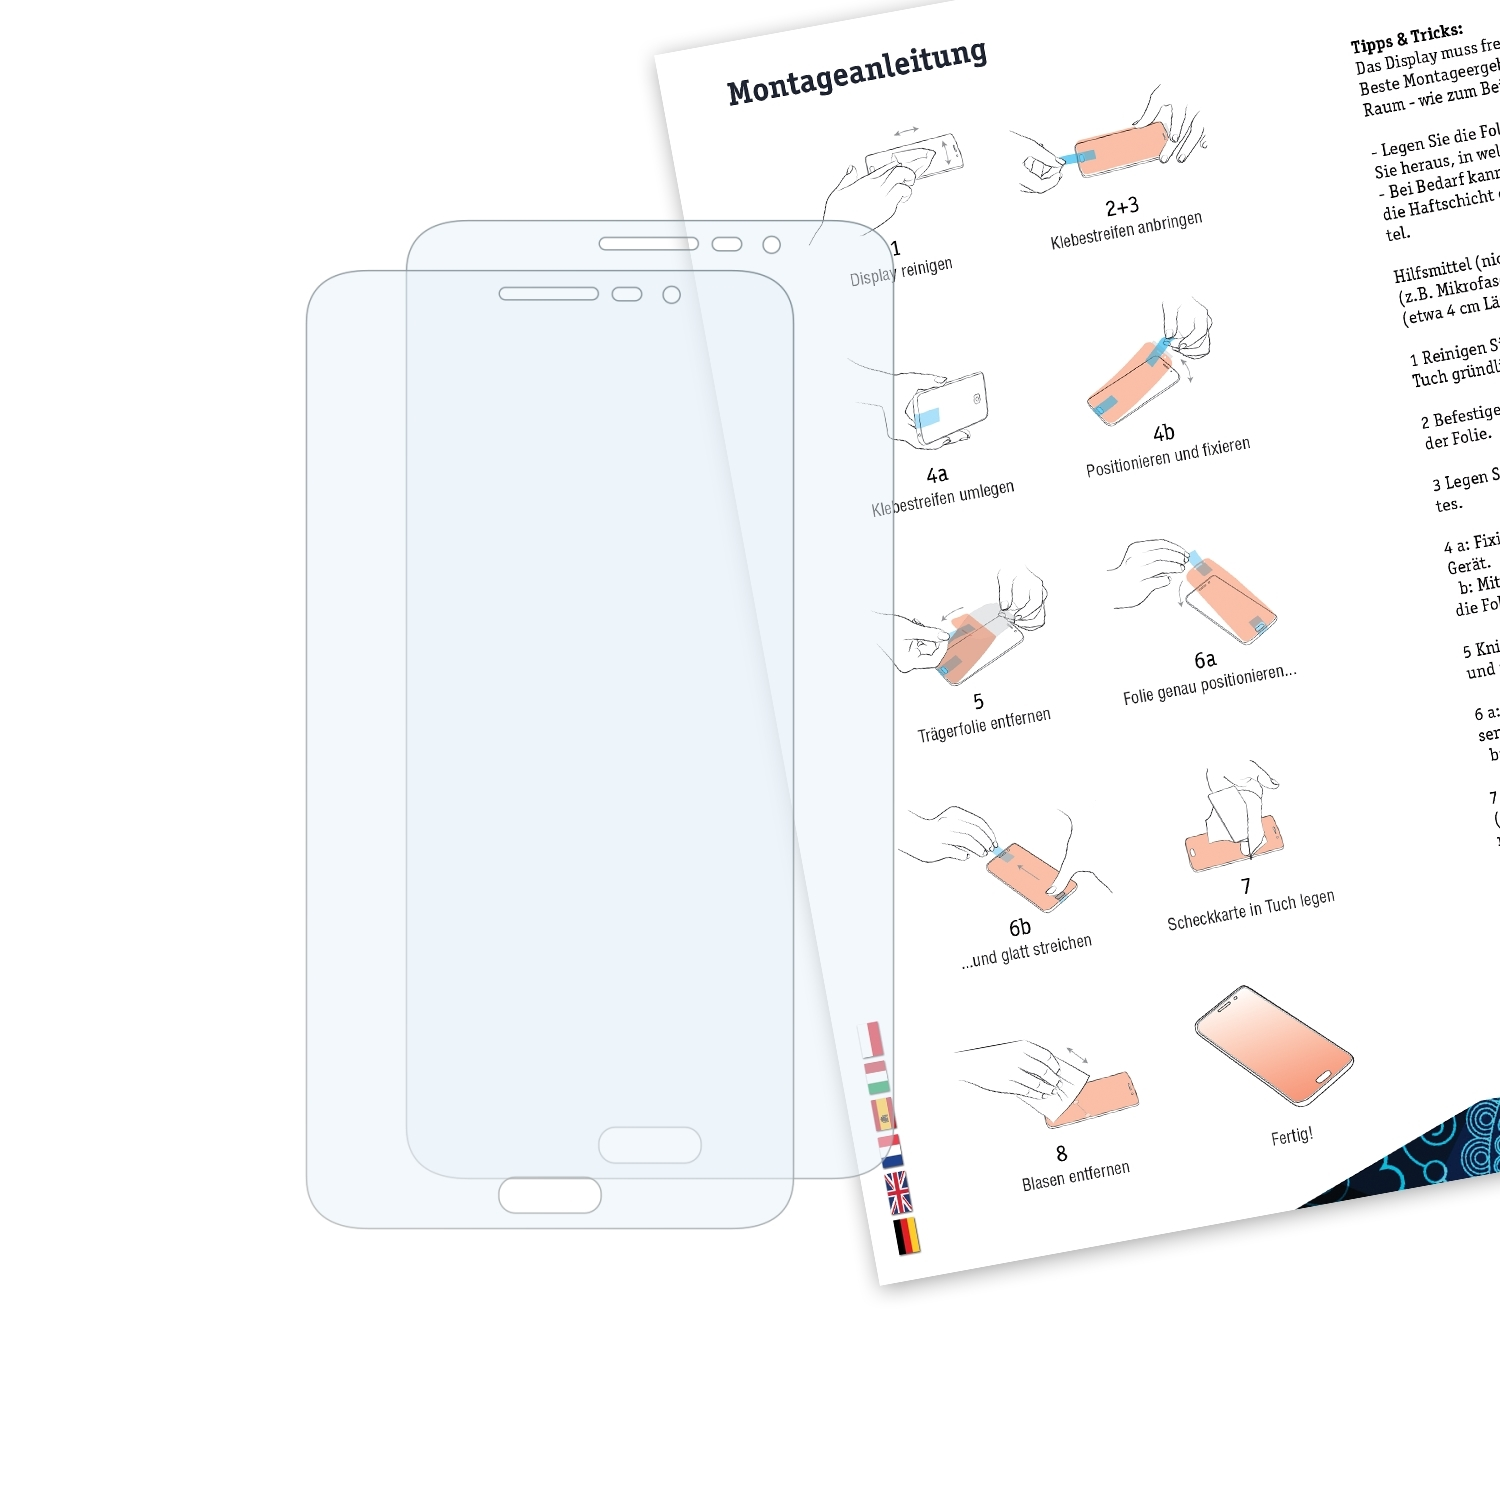 Basics-Clear BRUNI 2x Mega Galaxy 2) Samsung Schutzfolie(für